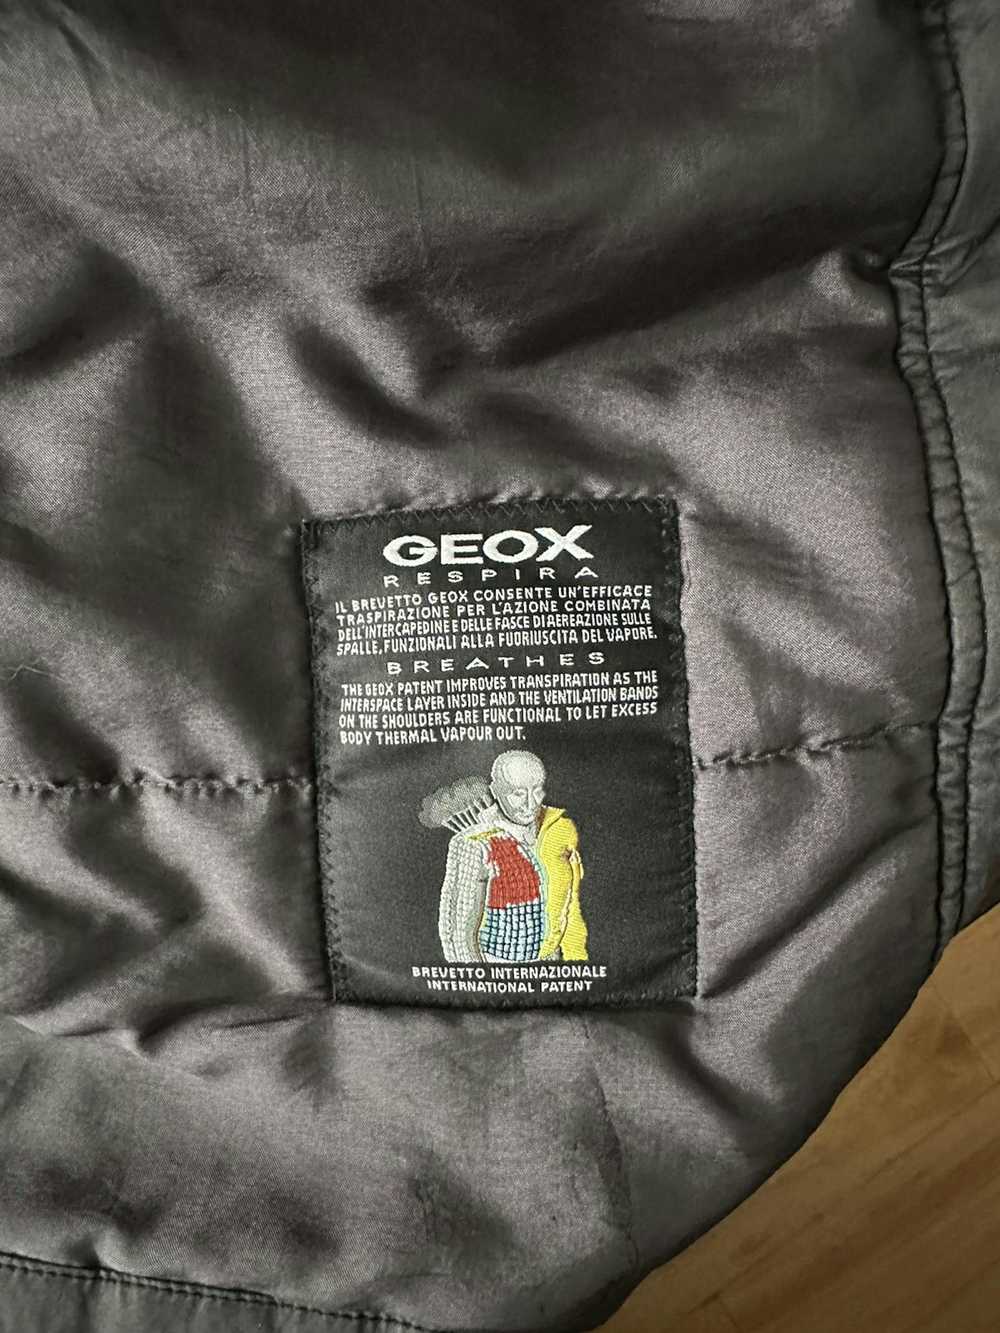 Geox Geox Respira Stone-washed Women’s Coat - image 3